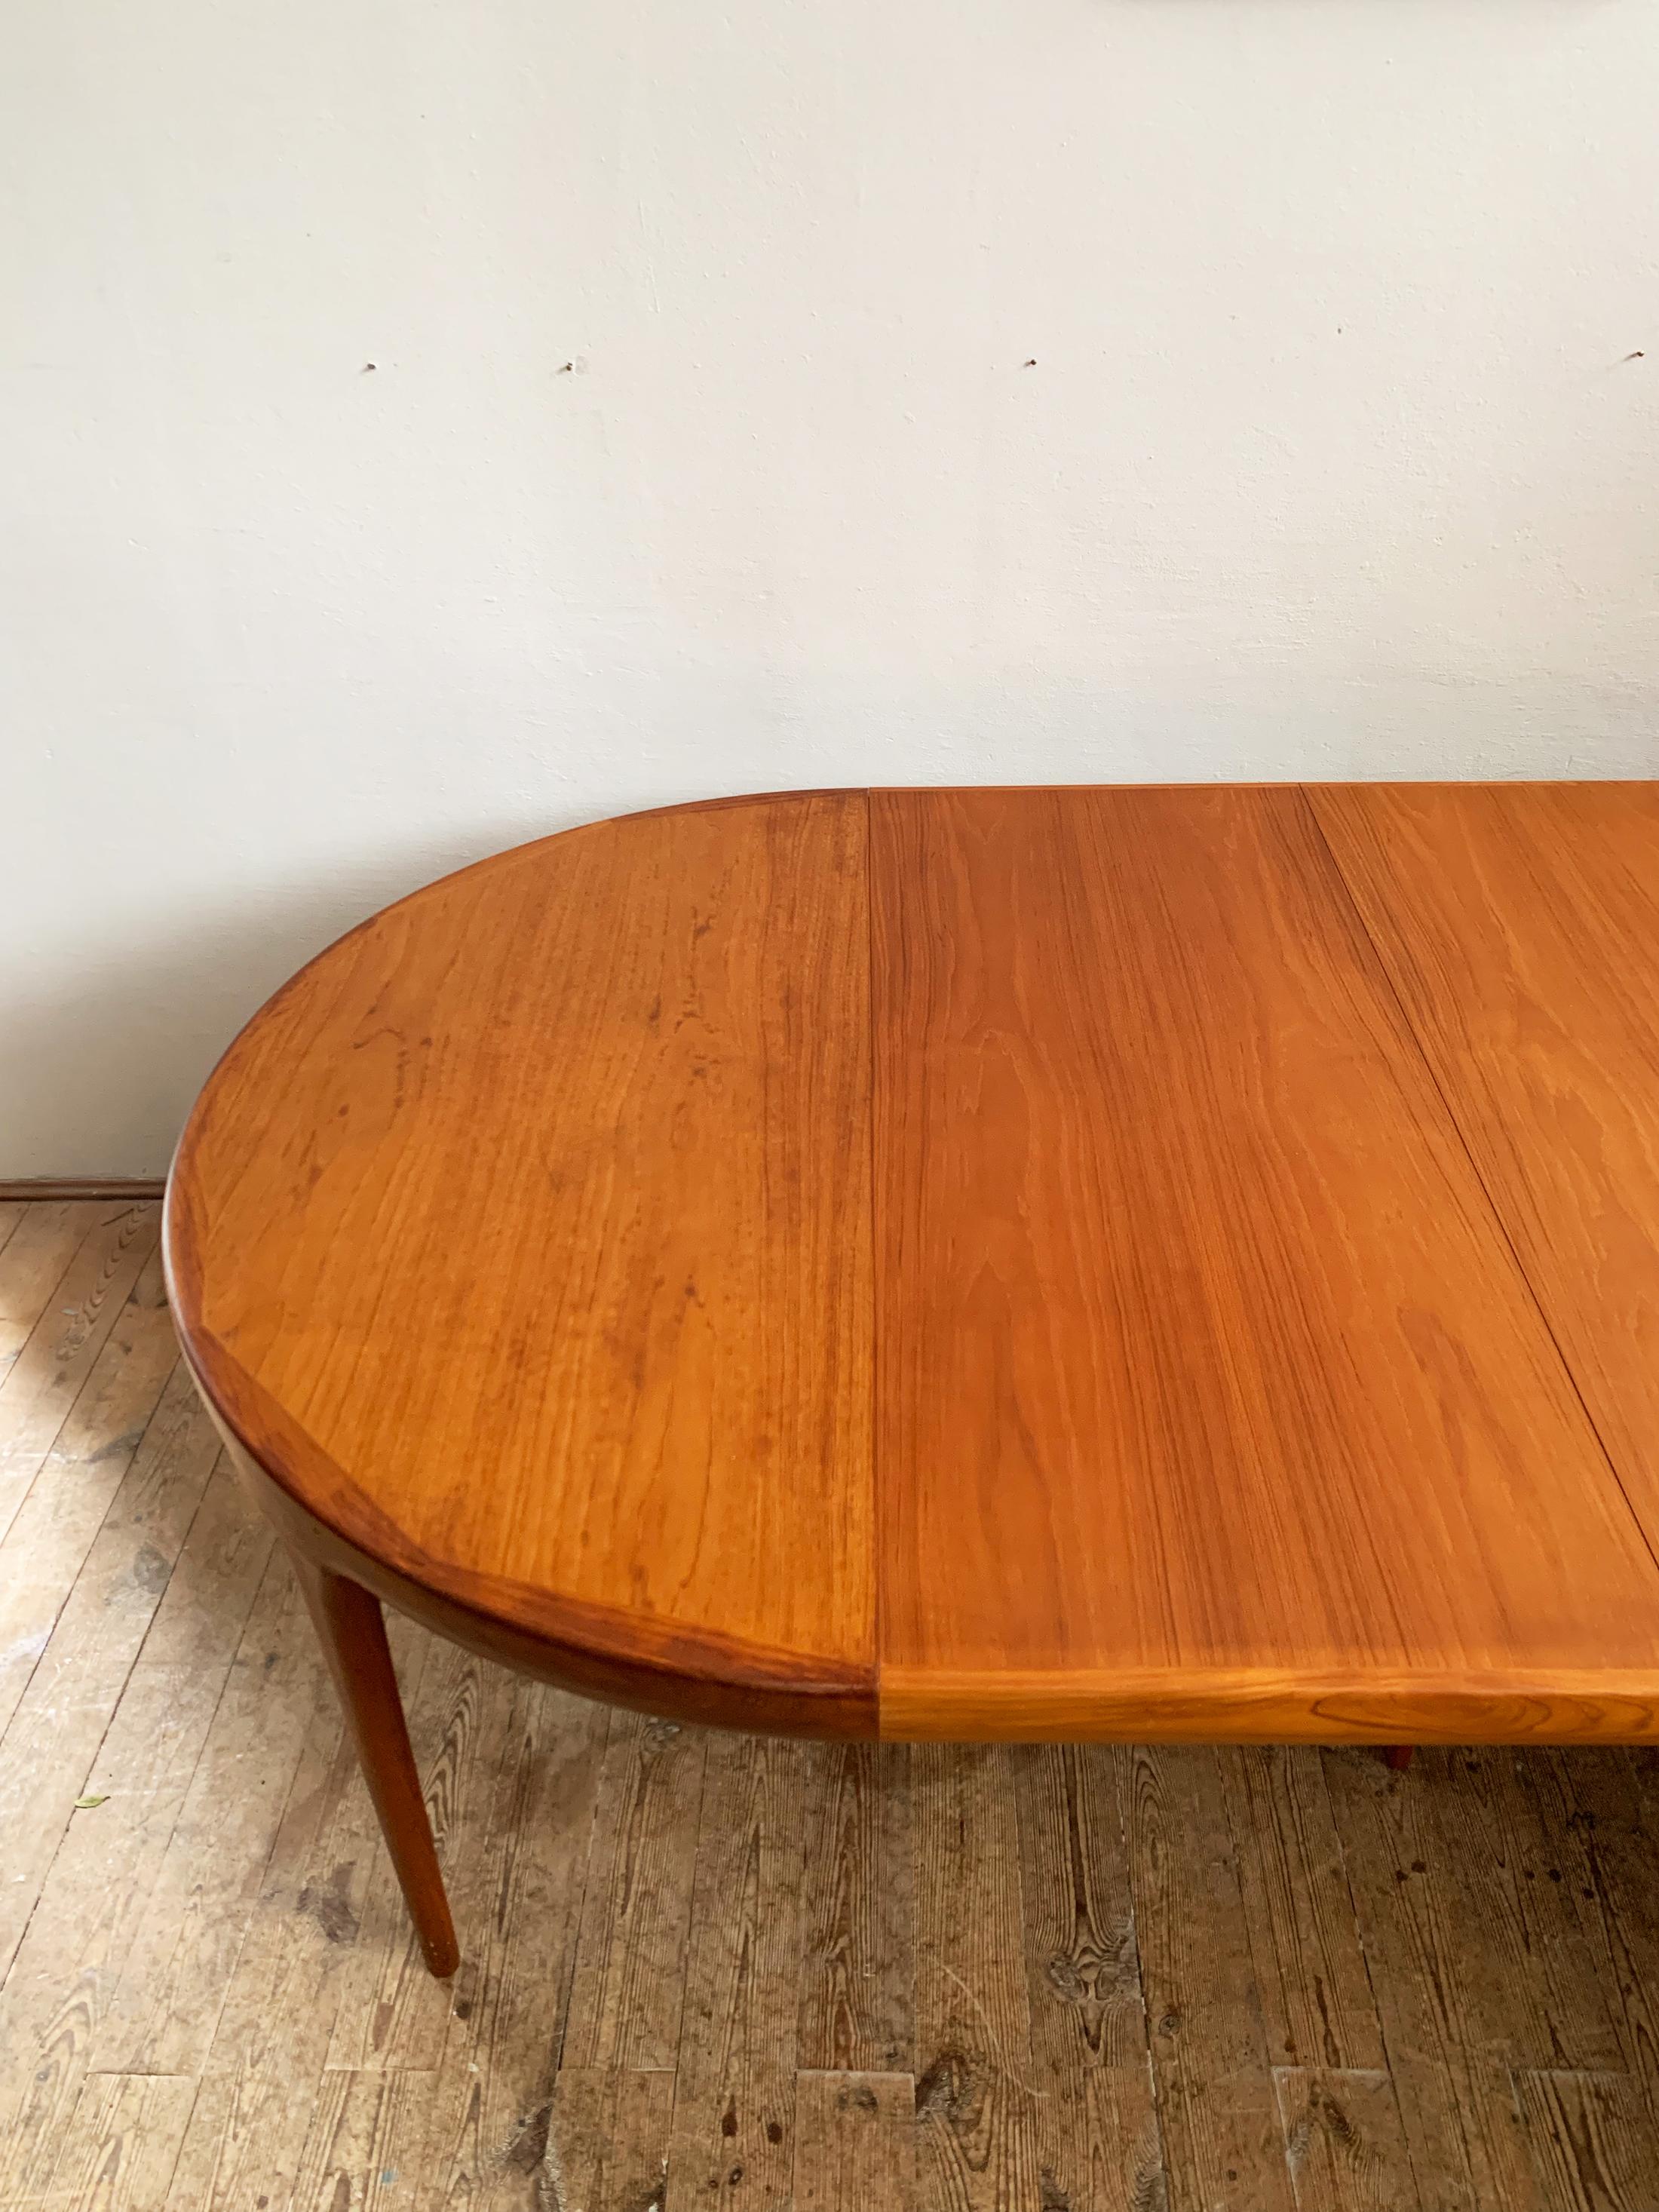 Danish Mid-Century Modern Extendable Teak Dining Table by Ib Kofod-Larsen, 1960s For Sale 14